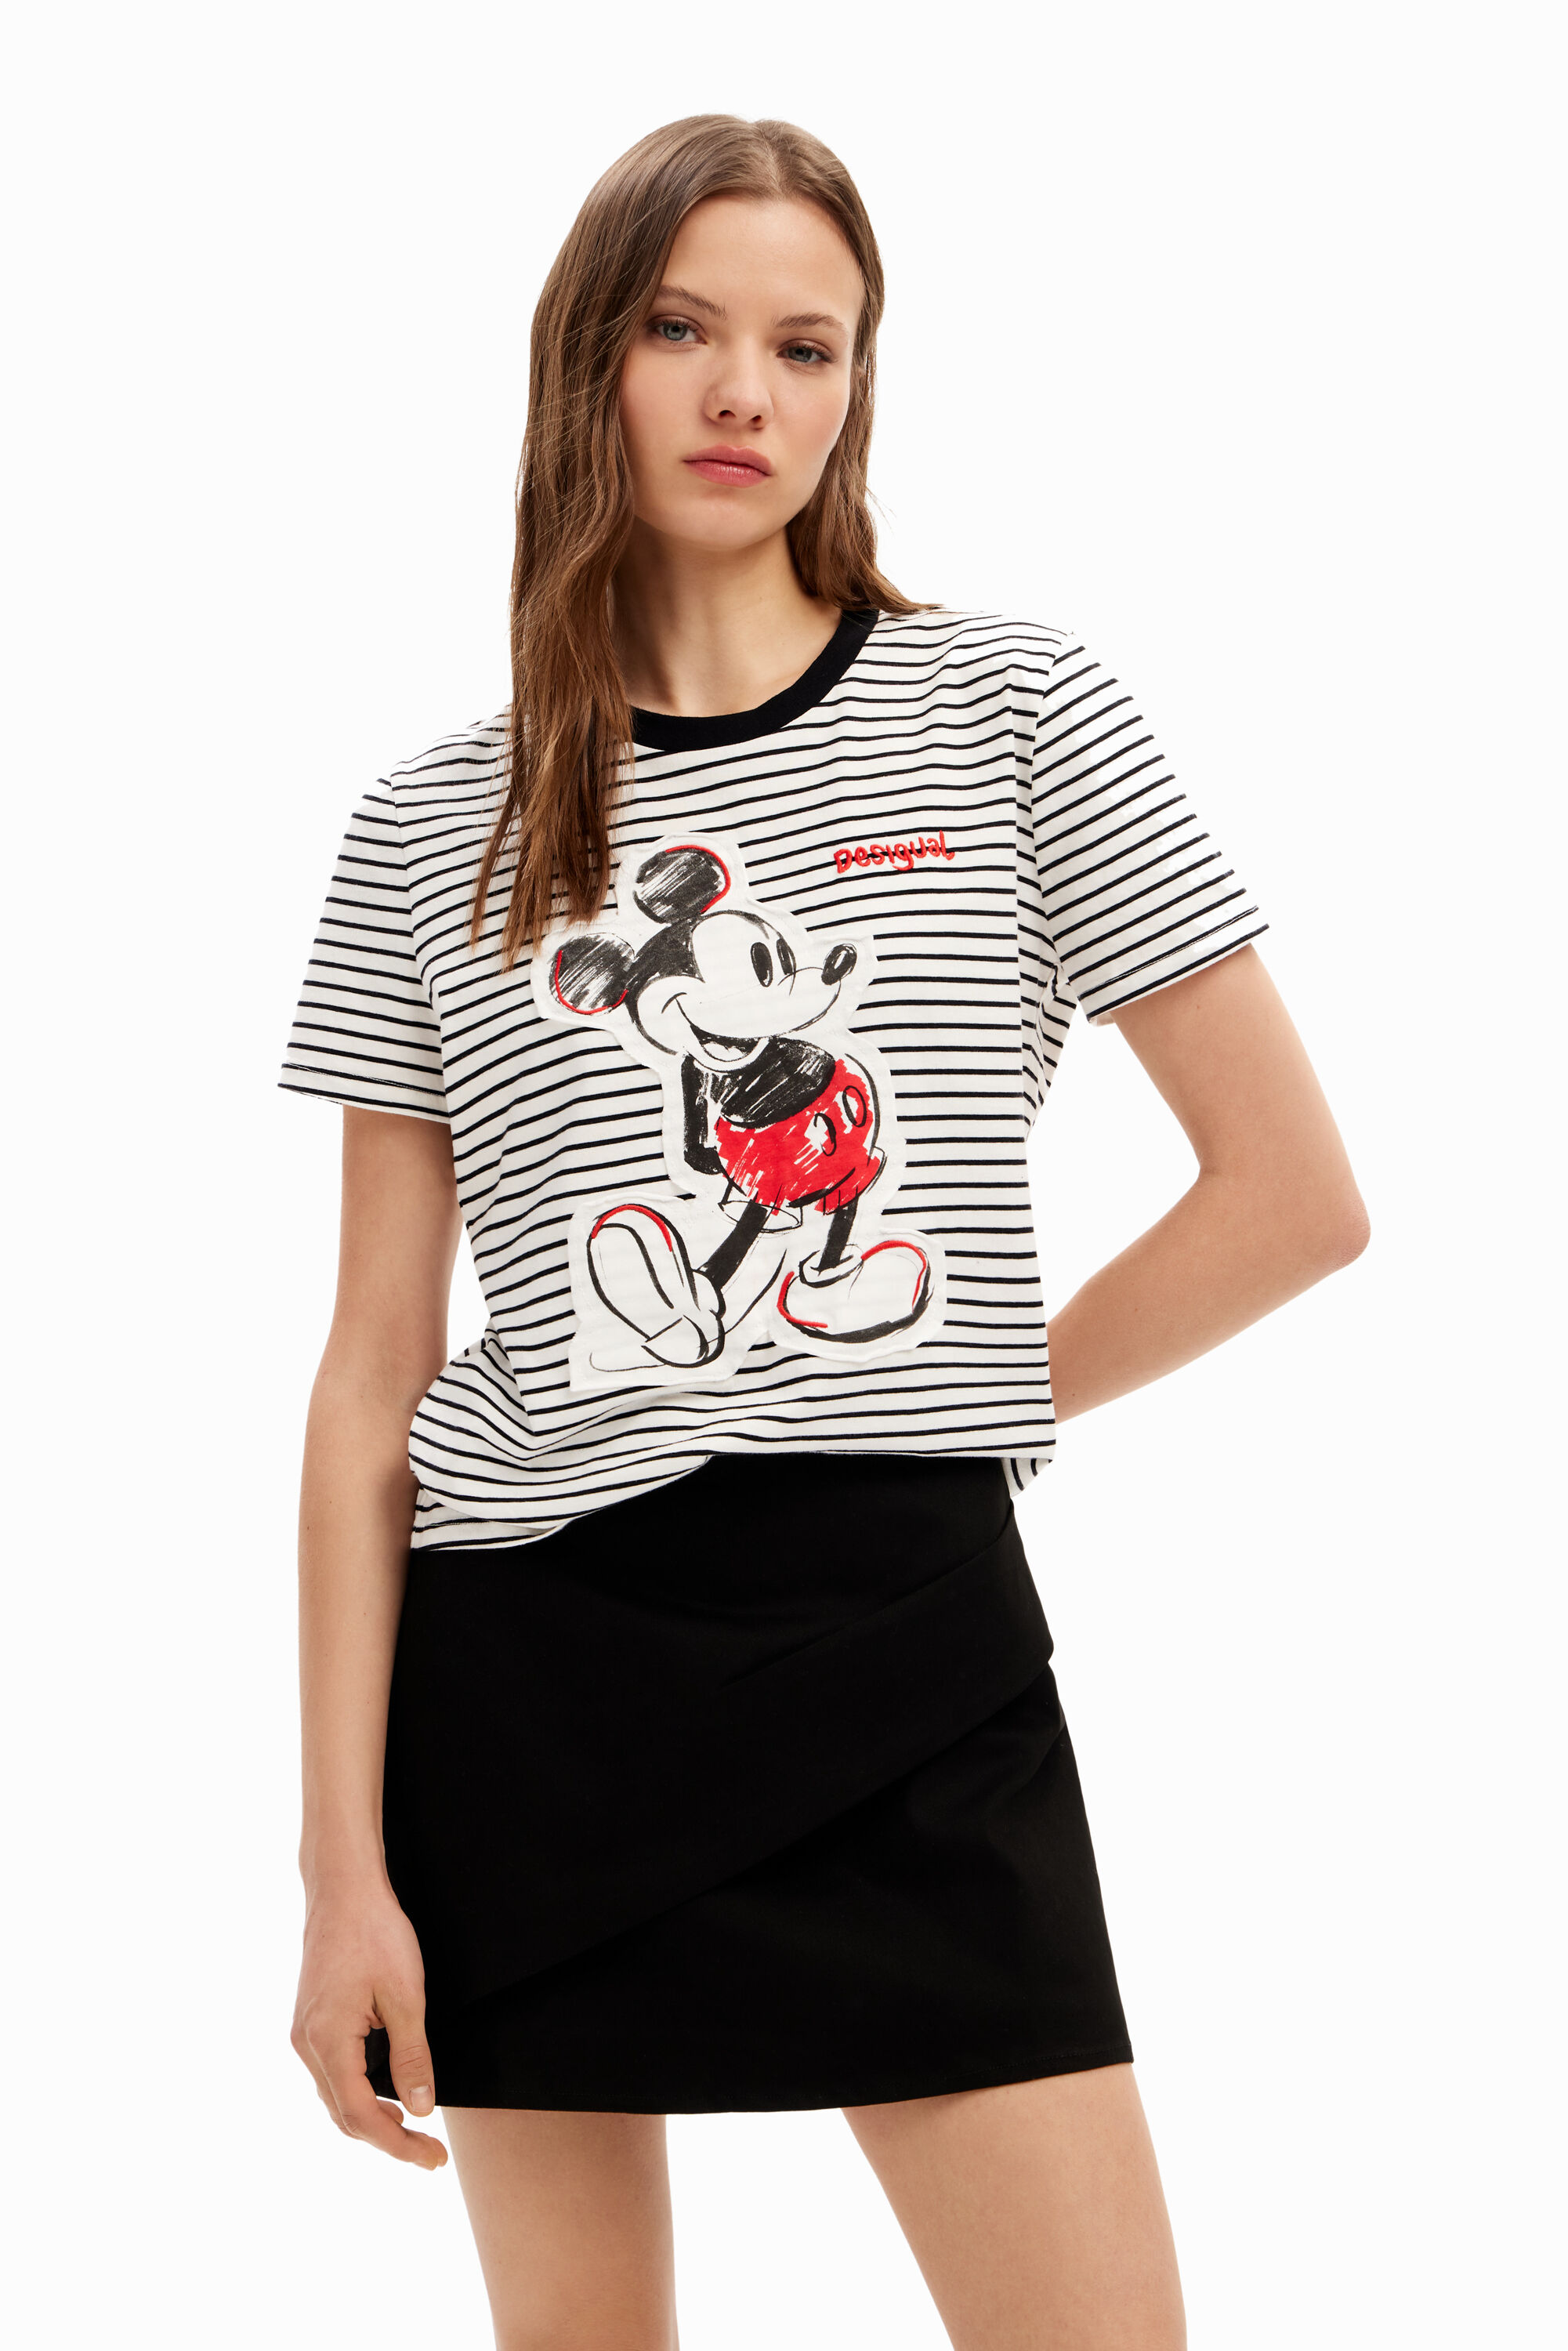 Striped Mickey Mouse T-shirt - WHITE - XXL